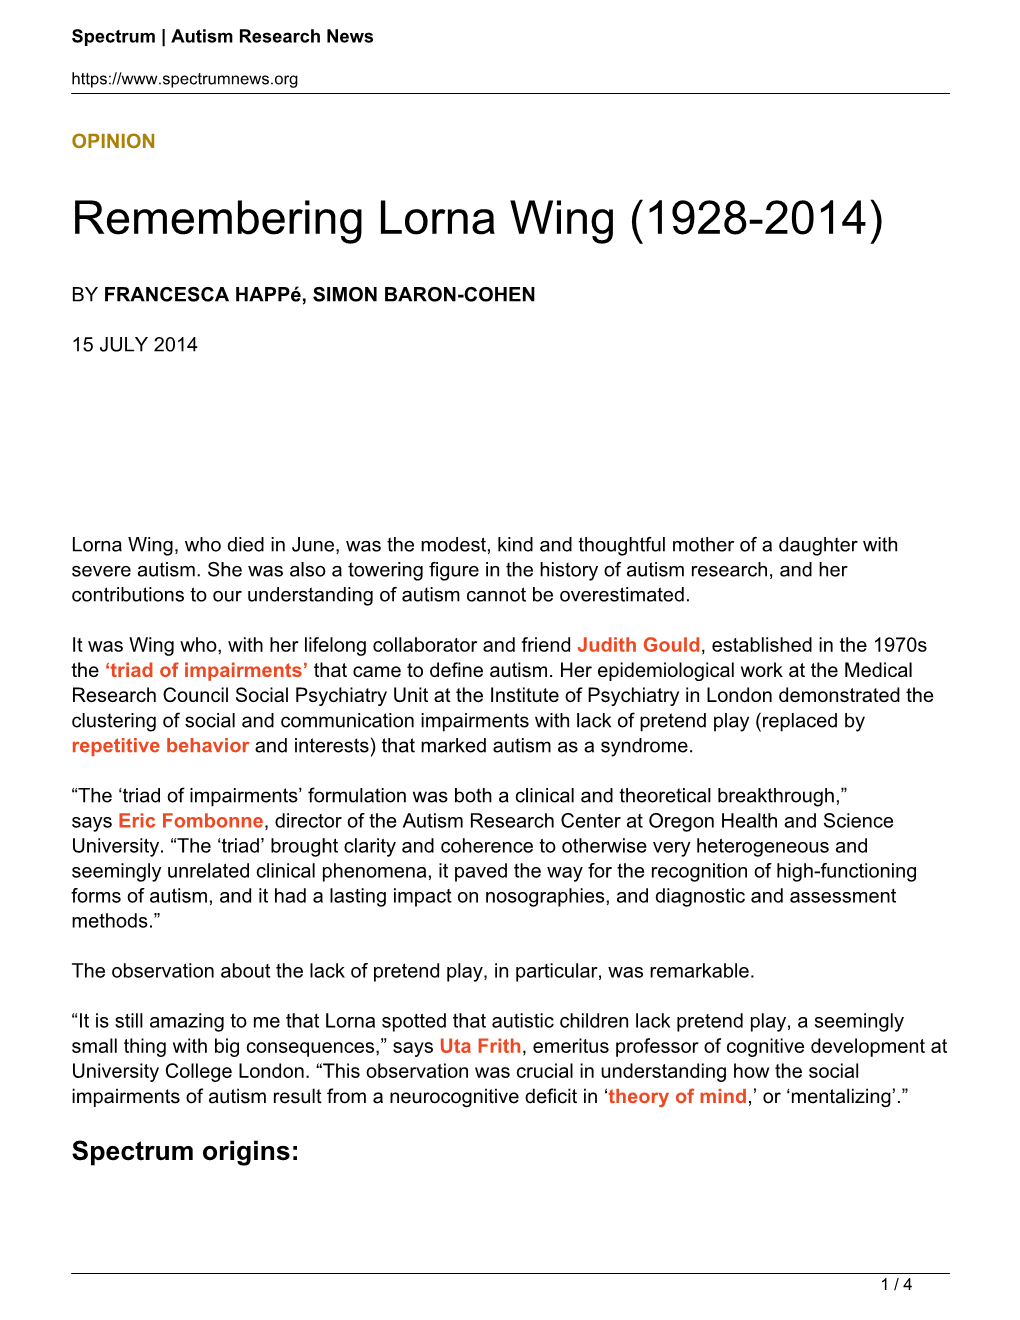 Remembering Lorna Wing (1928-2014)